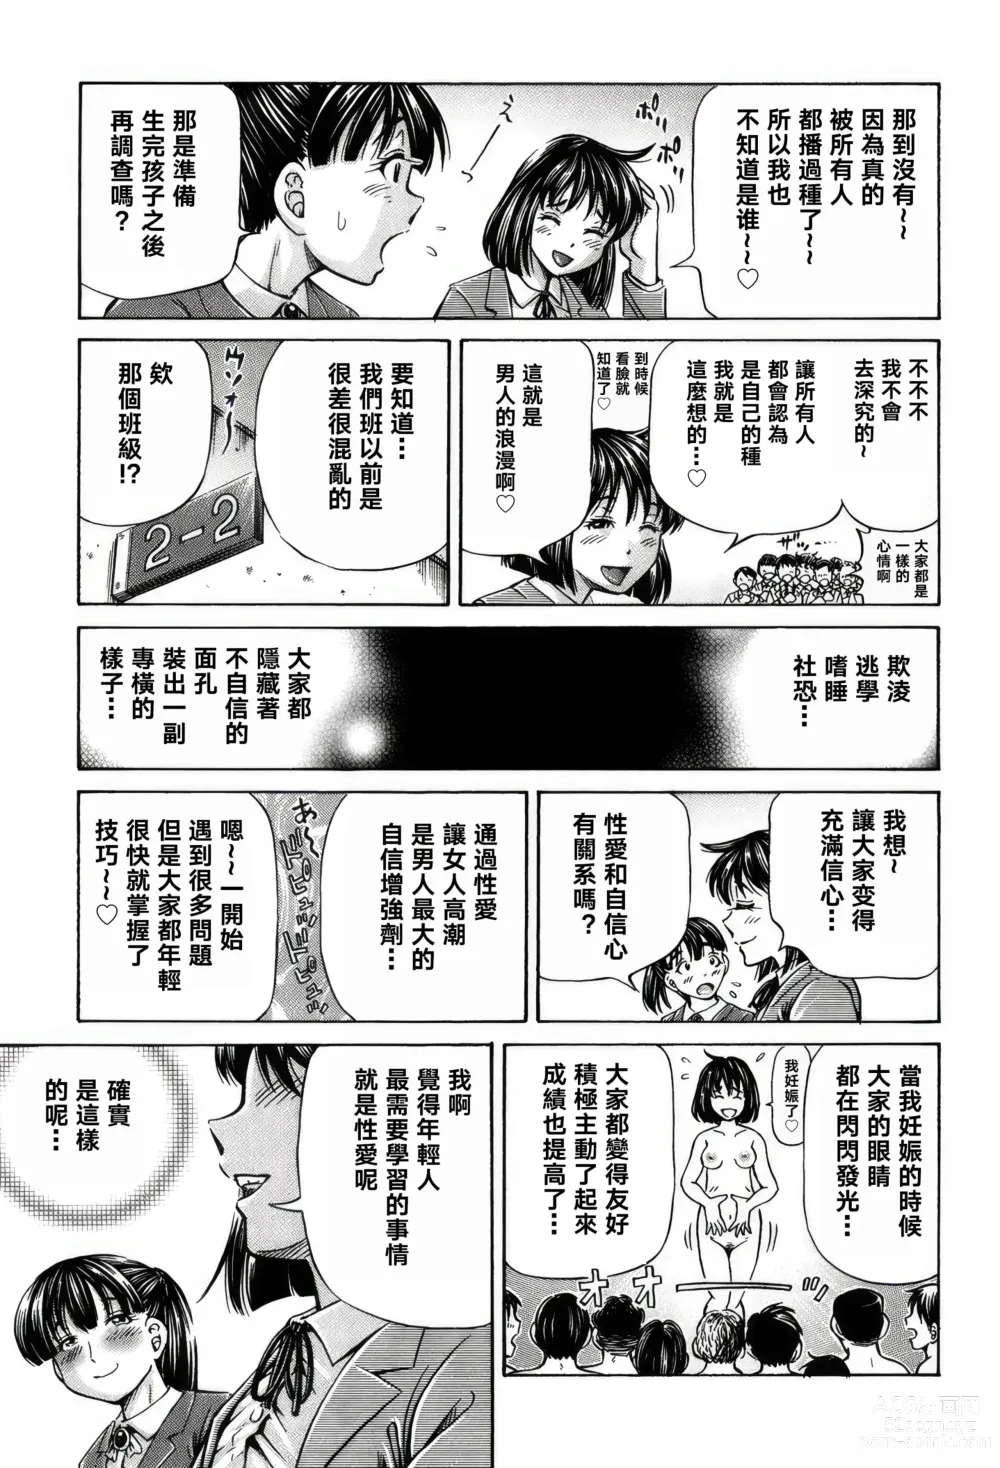 Page 181 of manga Cross-Breeding